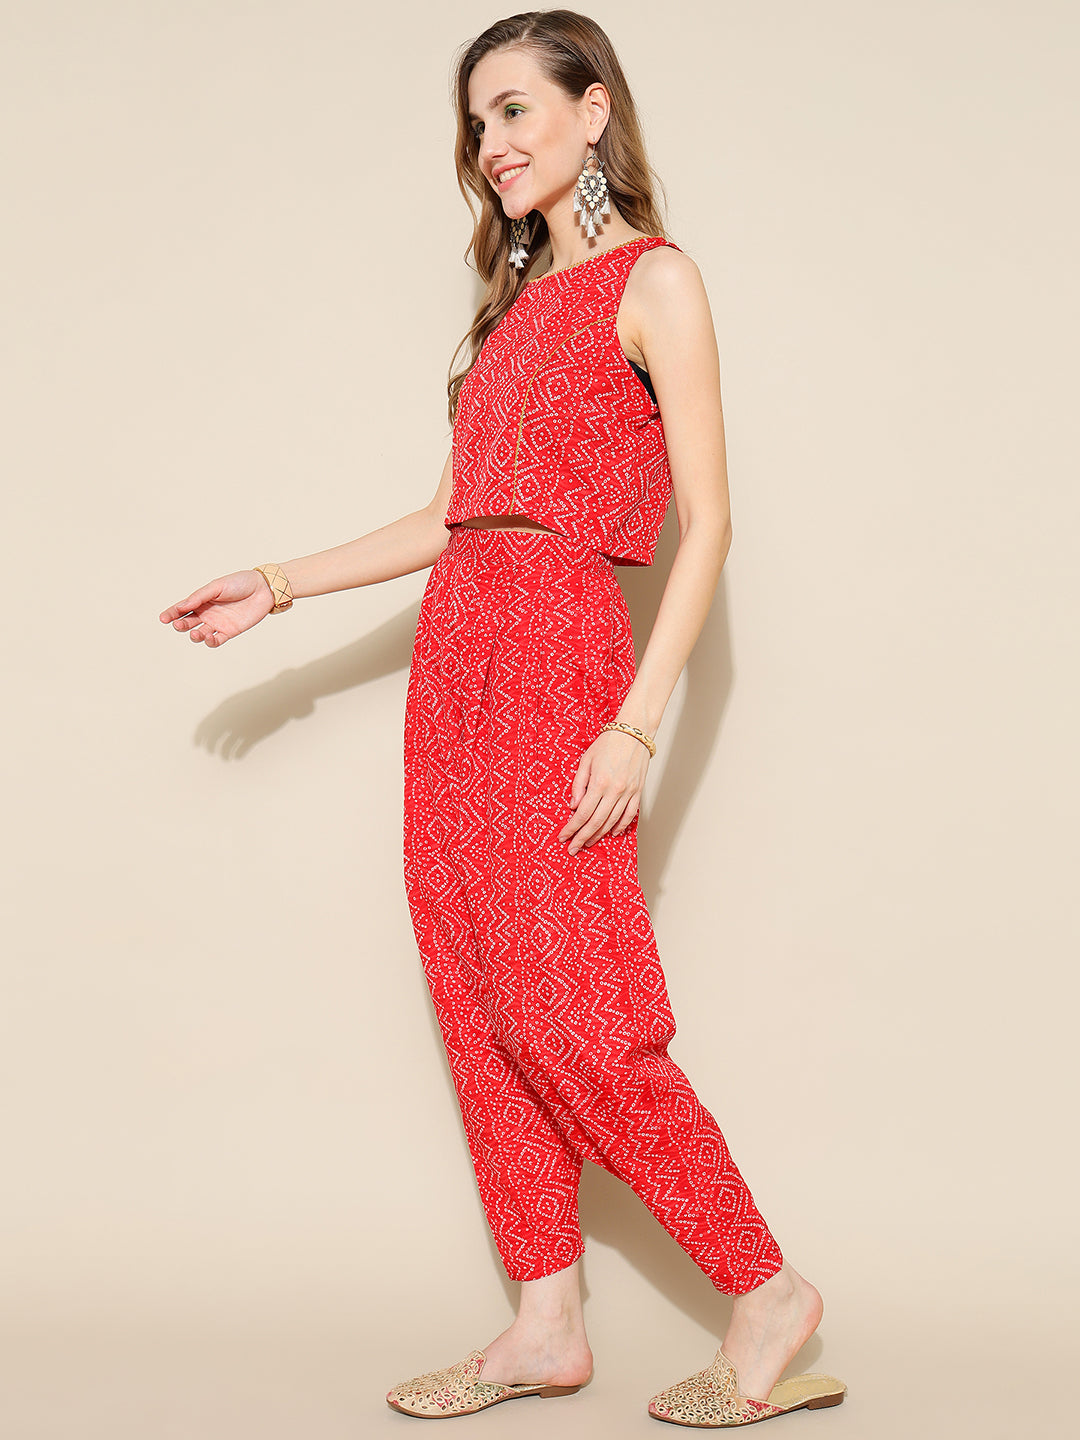 ANUSHIL Elegant Chundri Co-ord Set for Women - Perfect Ethnic Ensemble - Trendy Two-Piece Outfits(Red)